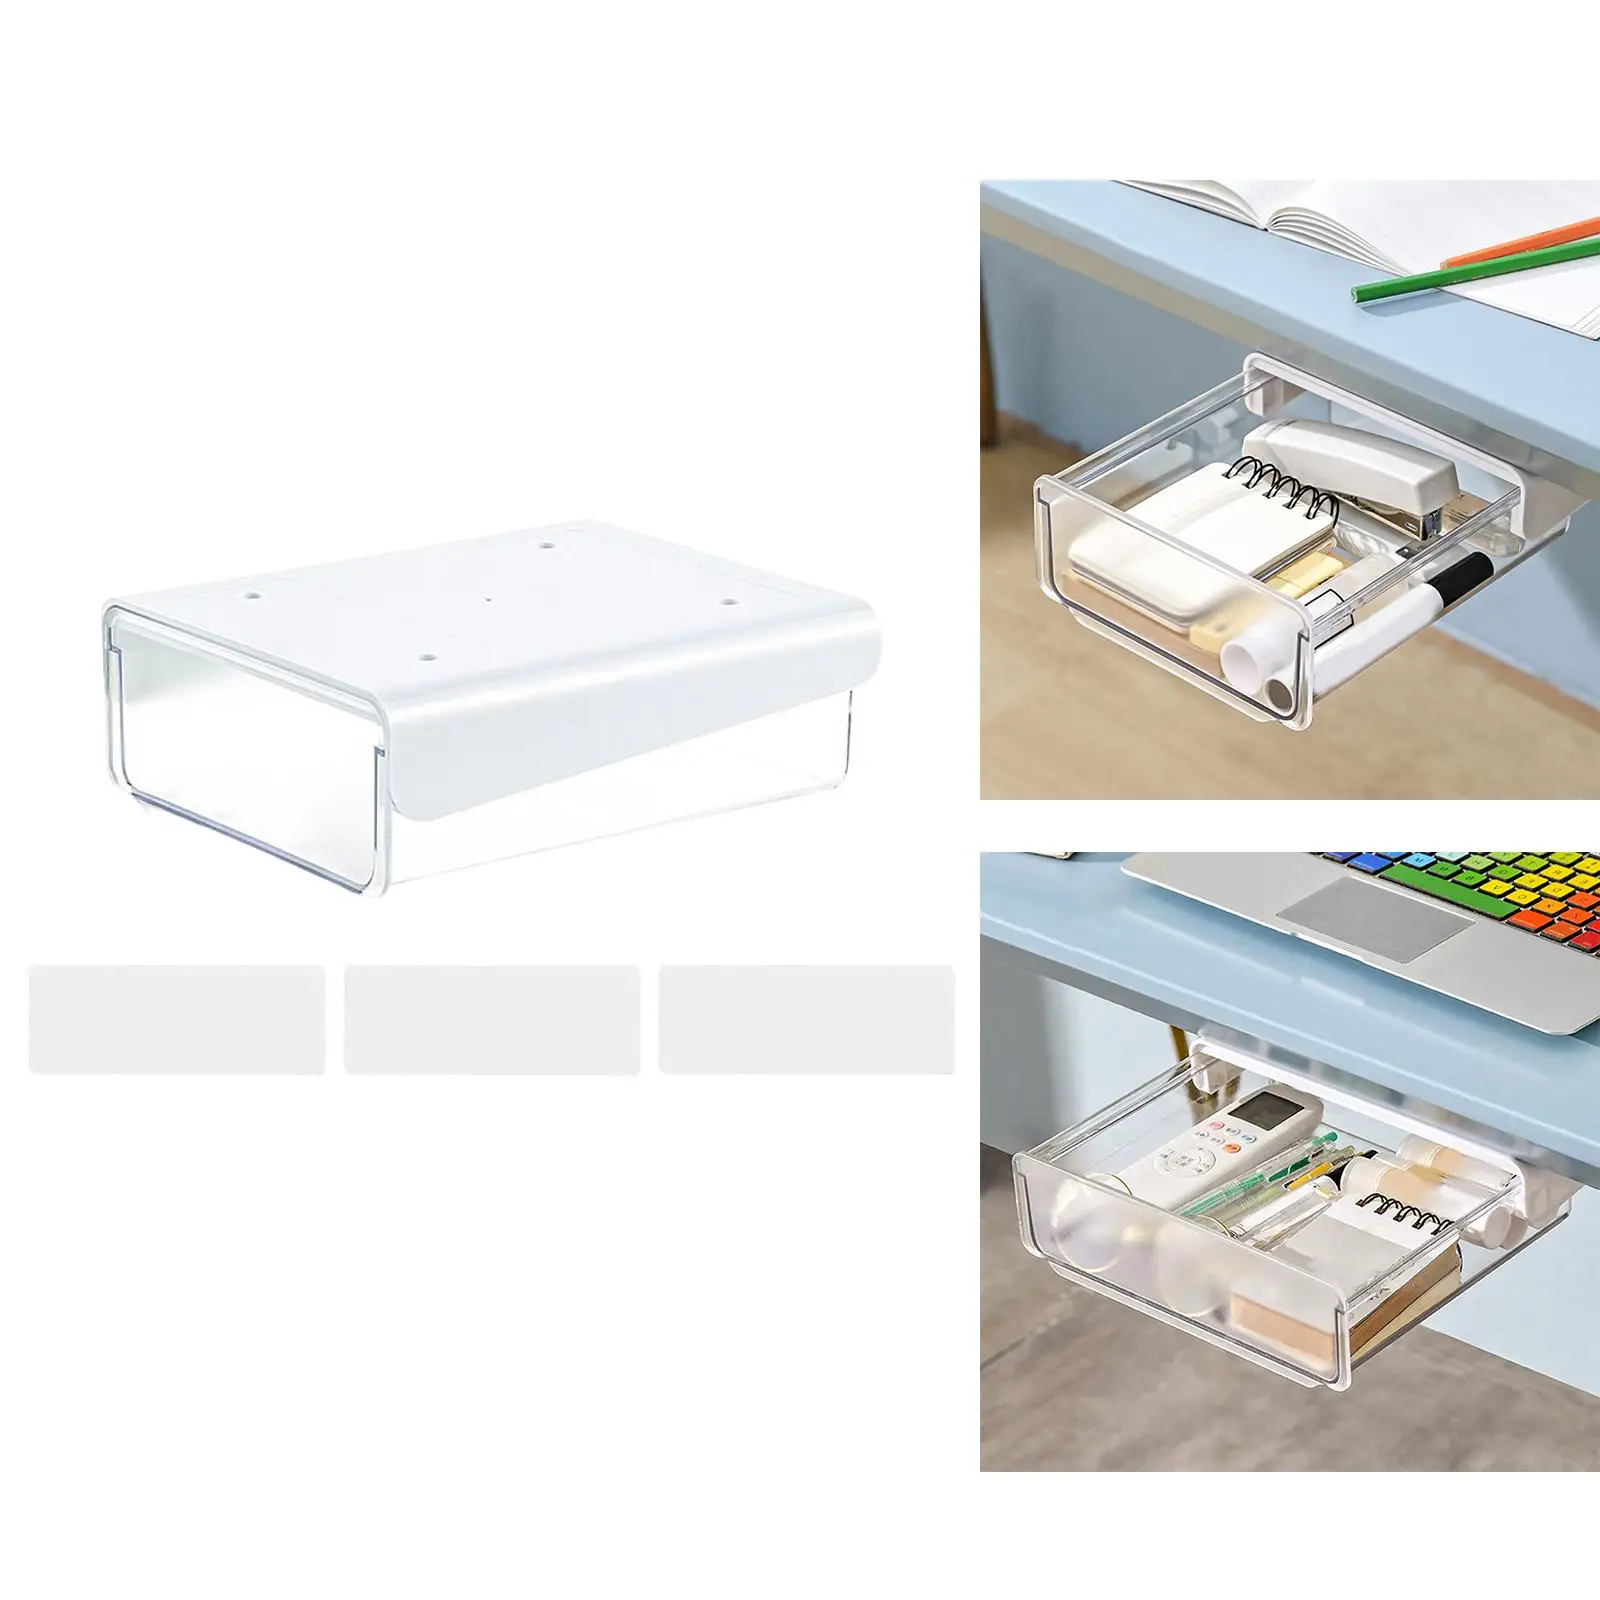 Self Adhesive Below Desk Drawer, Slide Out Office Supplies Hidden Organizer for Dormitory Bathroom Office Desk Workspace School